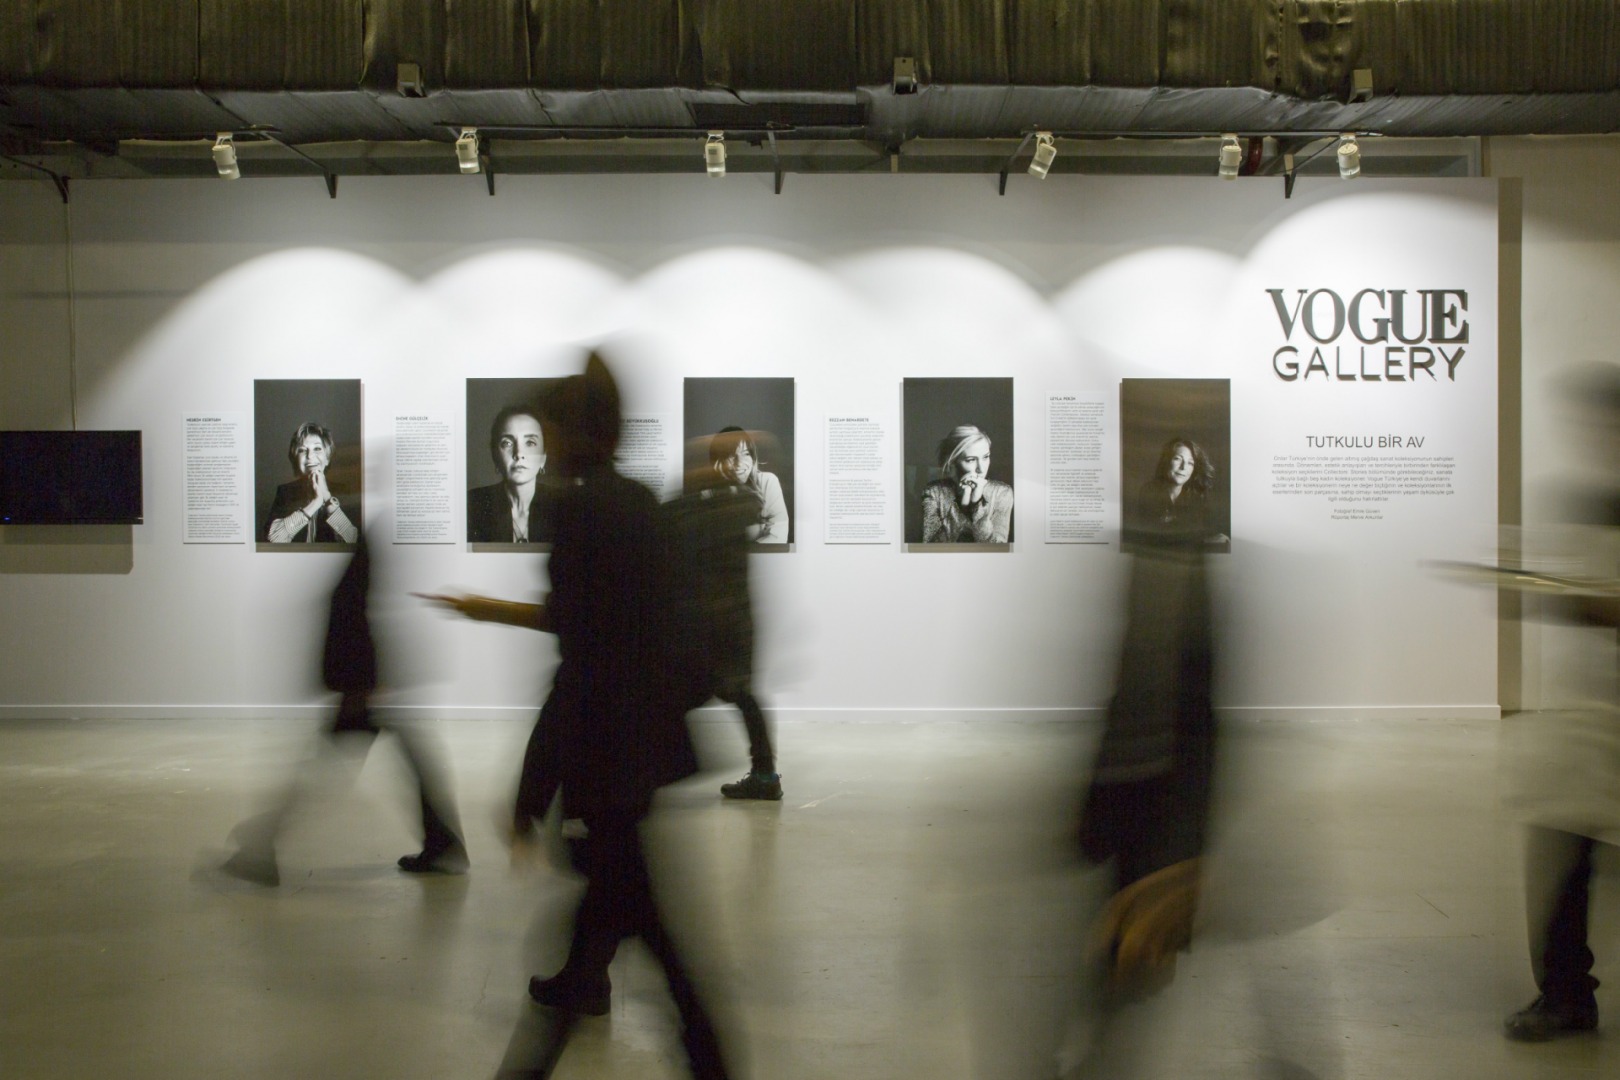 Vogue Gallery: Tutkulu Bir Av